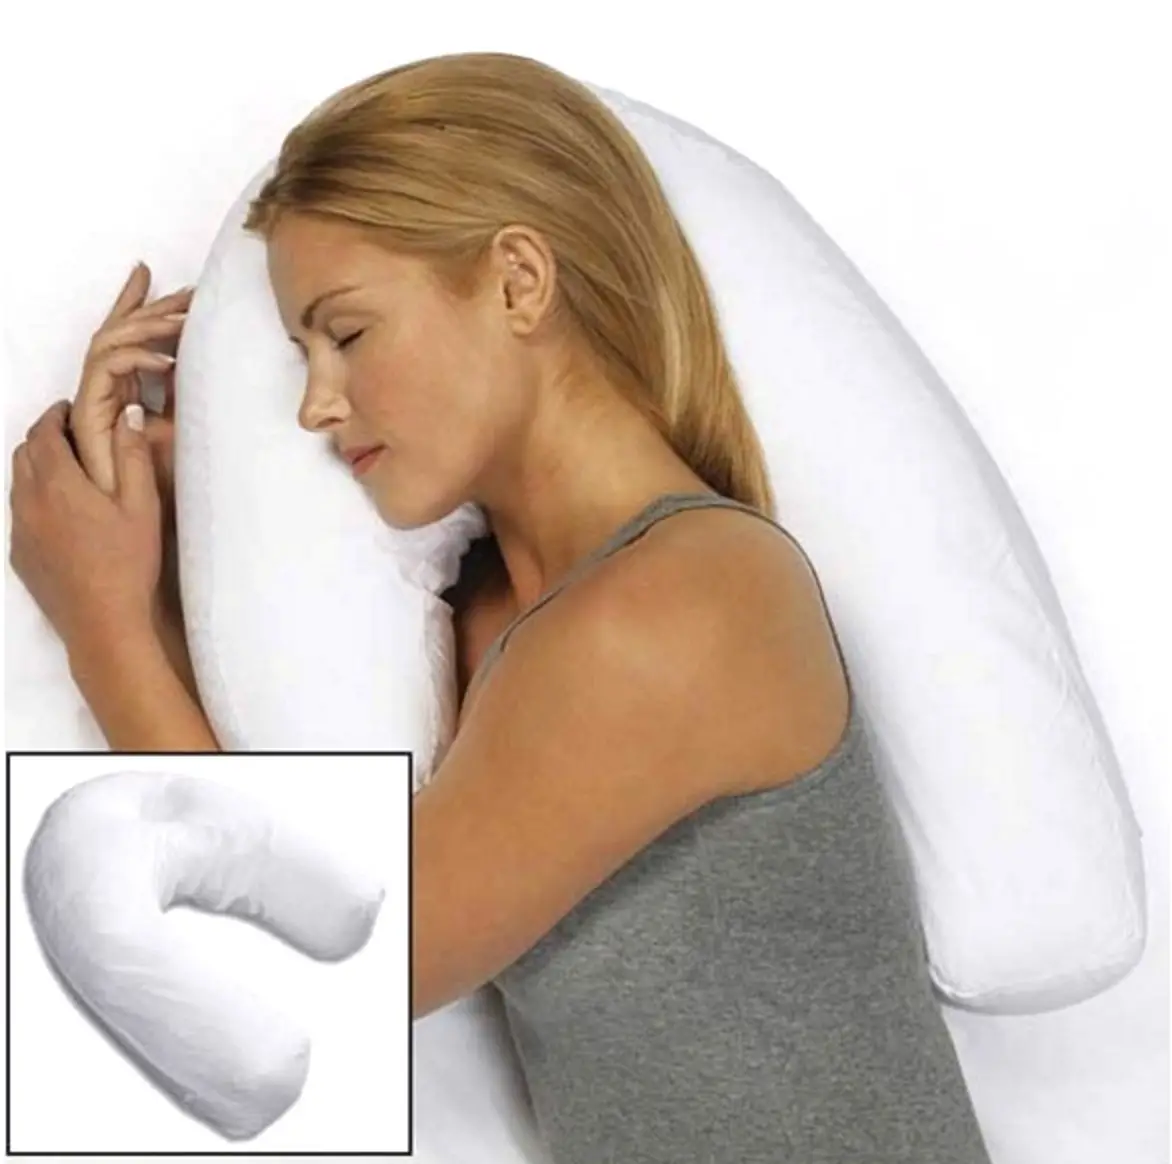 DHAMMA Pillow Side Sleeper Headrest Travel Soft Anti